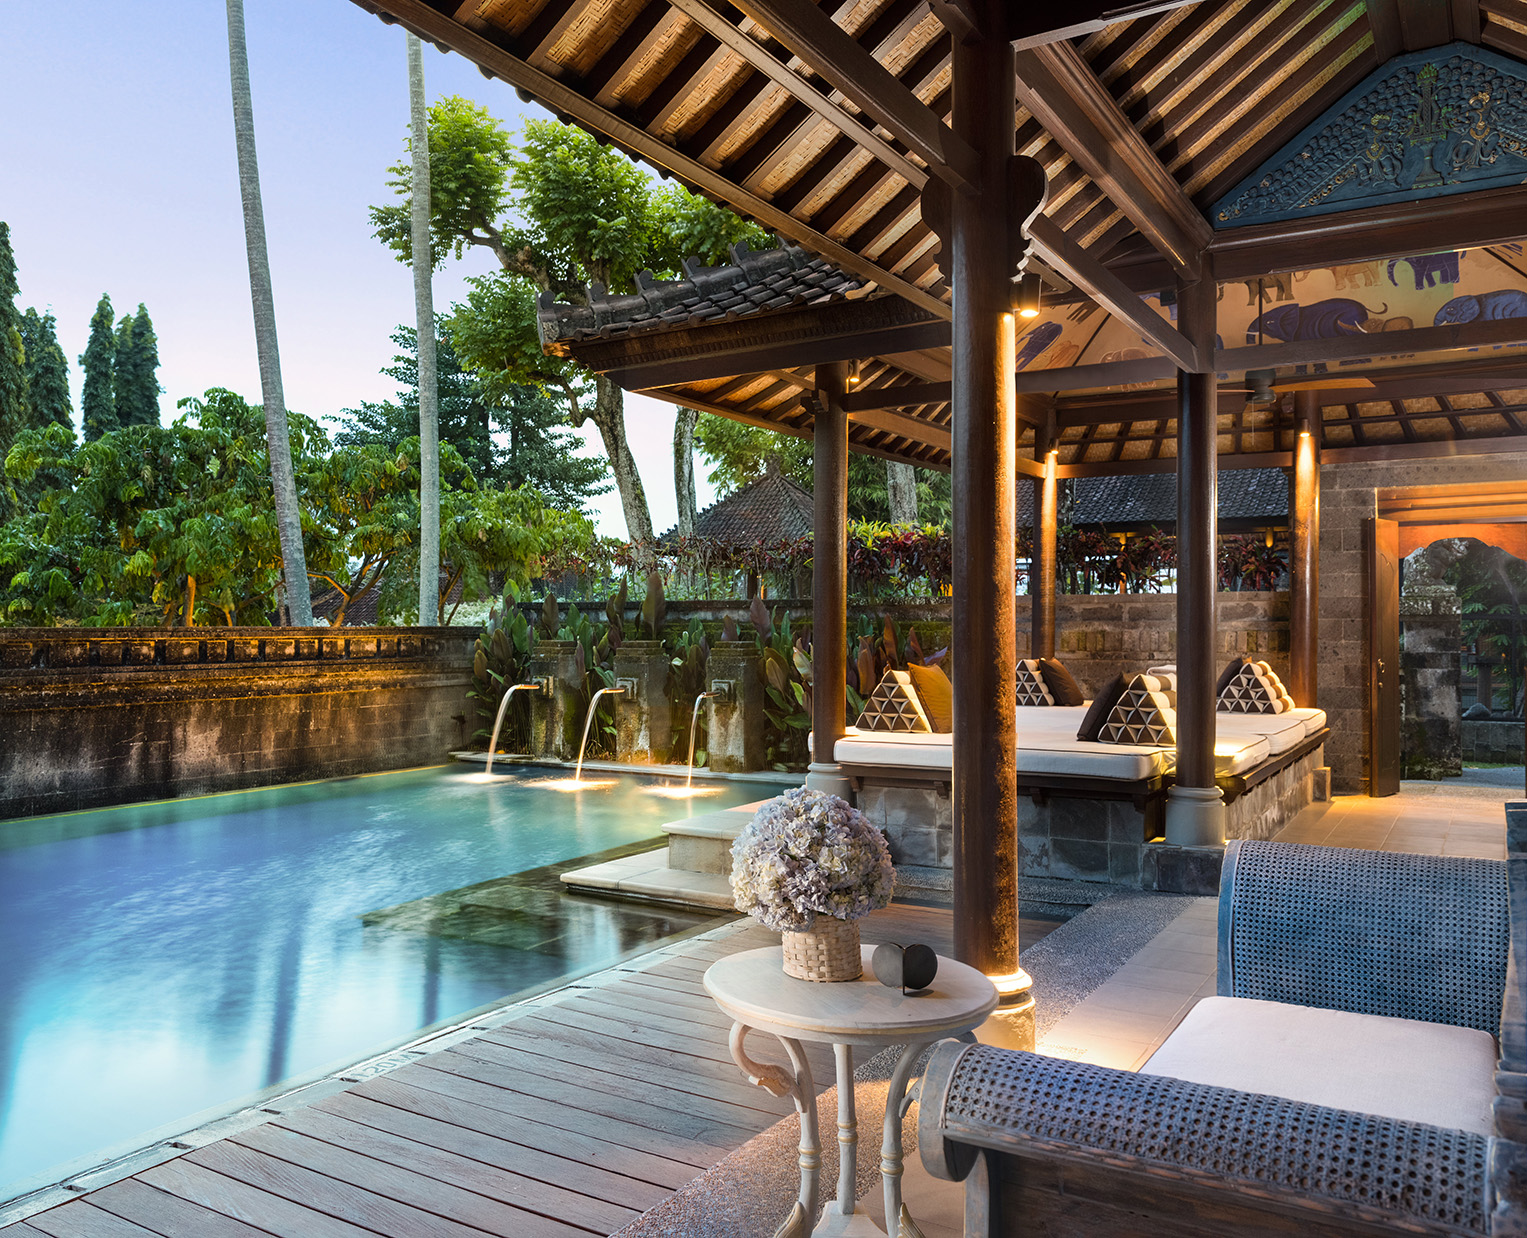 The Hadiprana Villa - Pool - Tanah Gajah in Bali